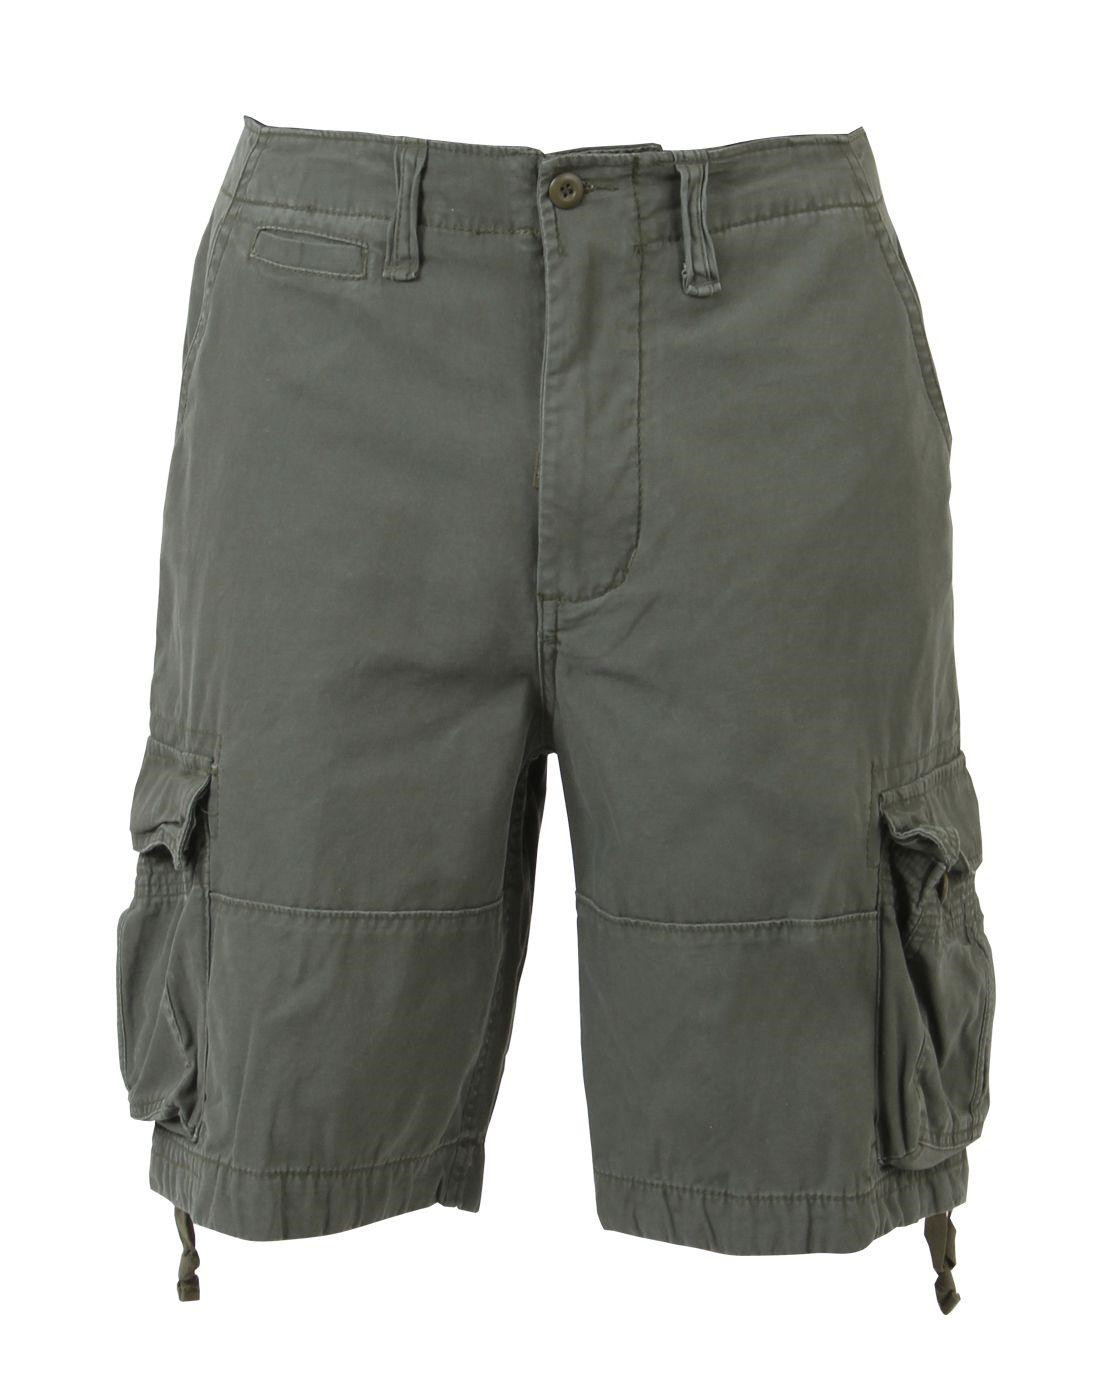 Rothco Vintage Infantry Shorts (Oliven, XL)